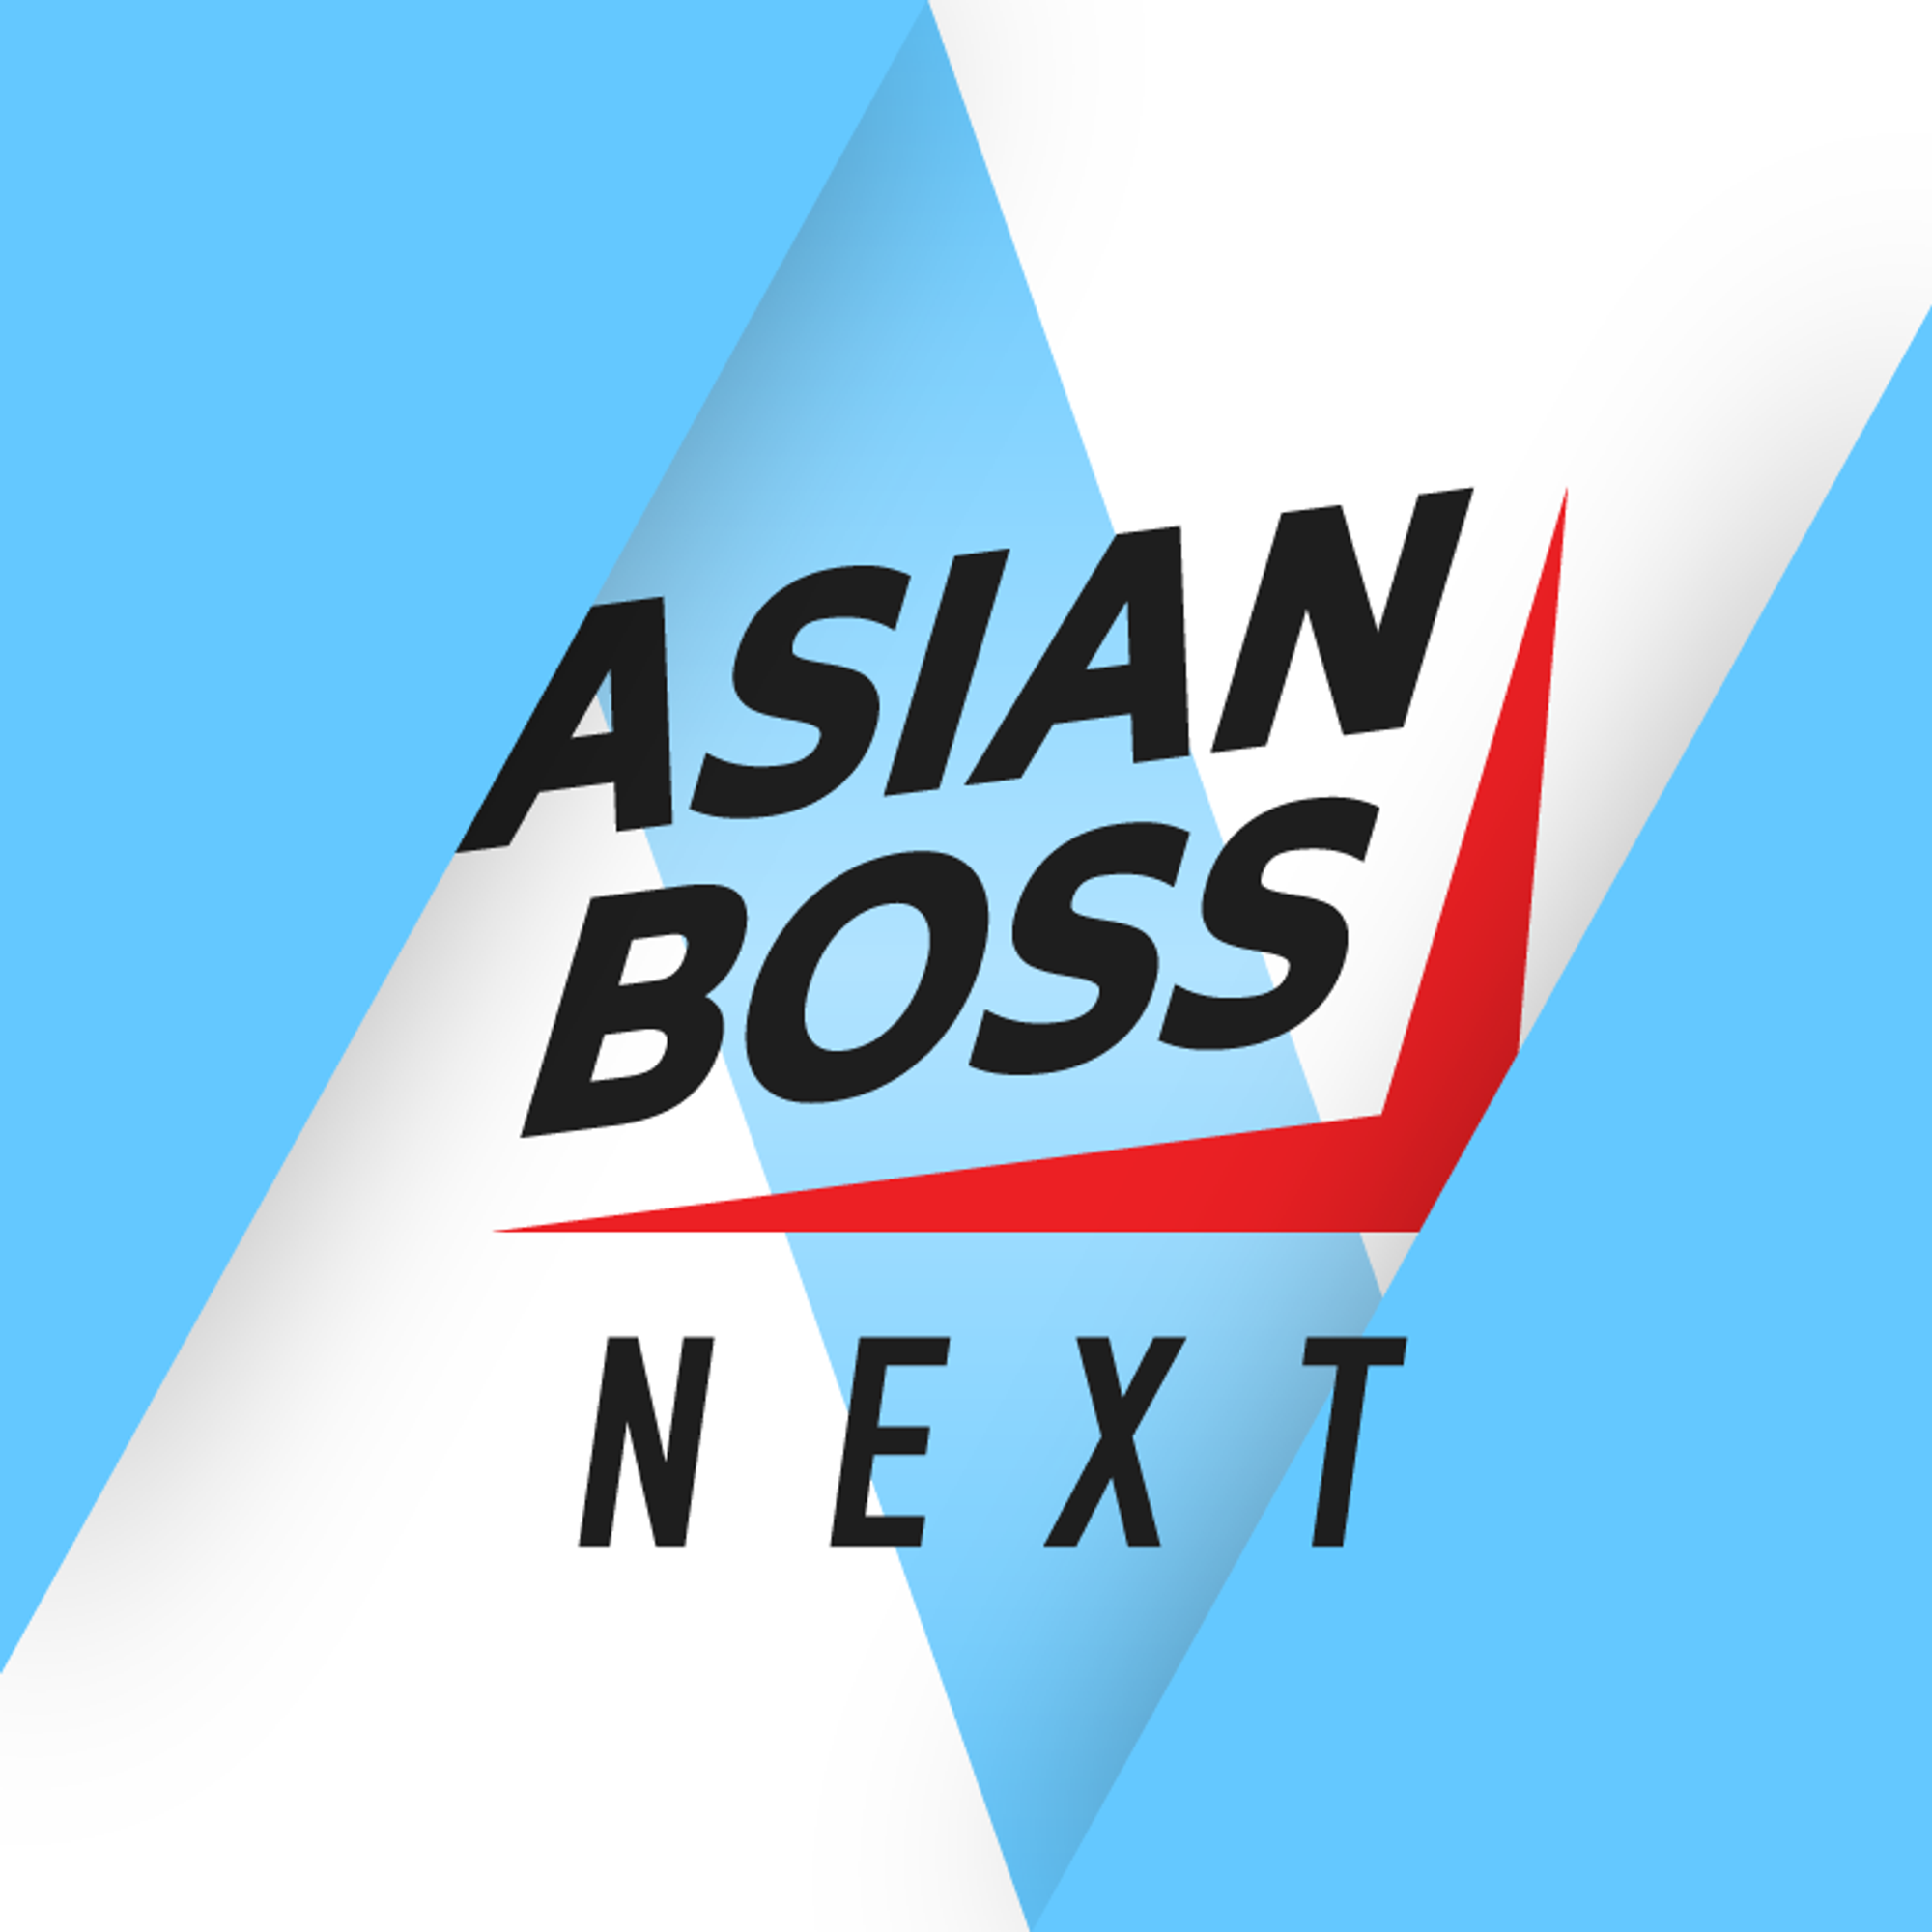 Asian Boss NEXT
Incheon, South Korea
Mar 2022 - Present